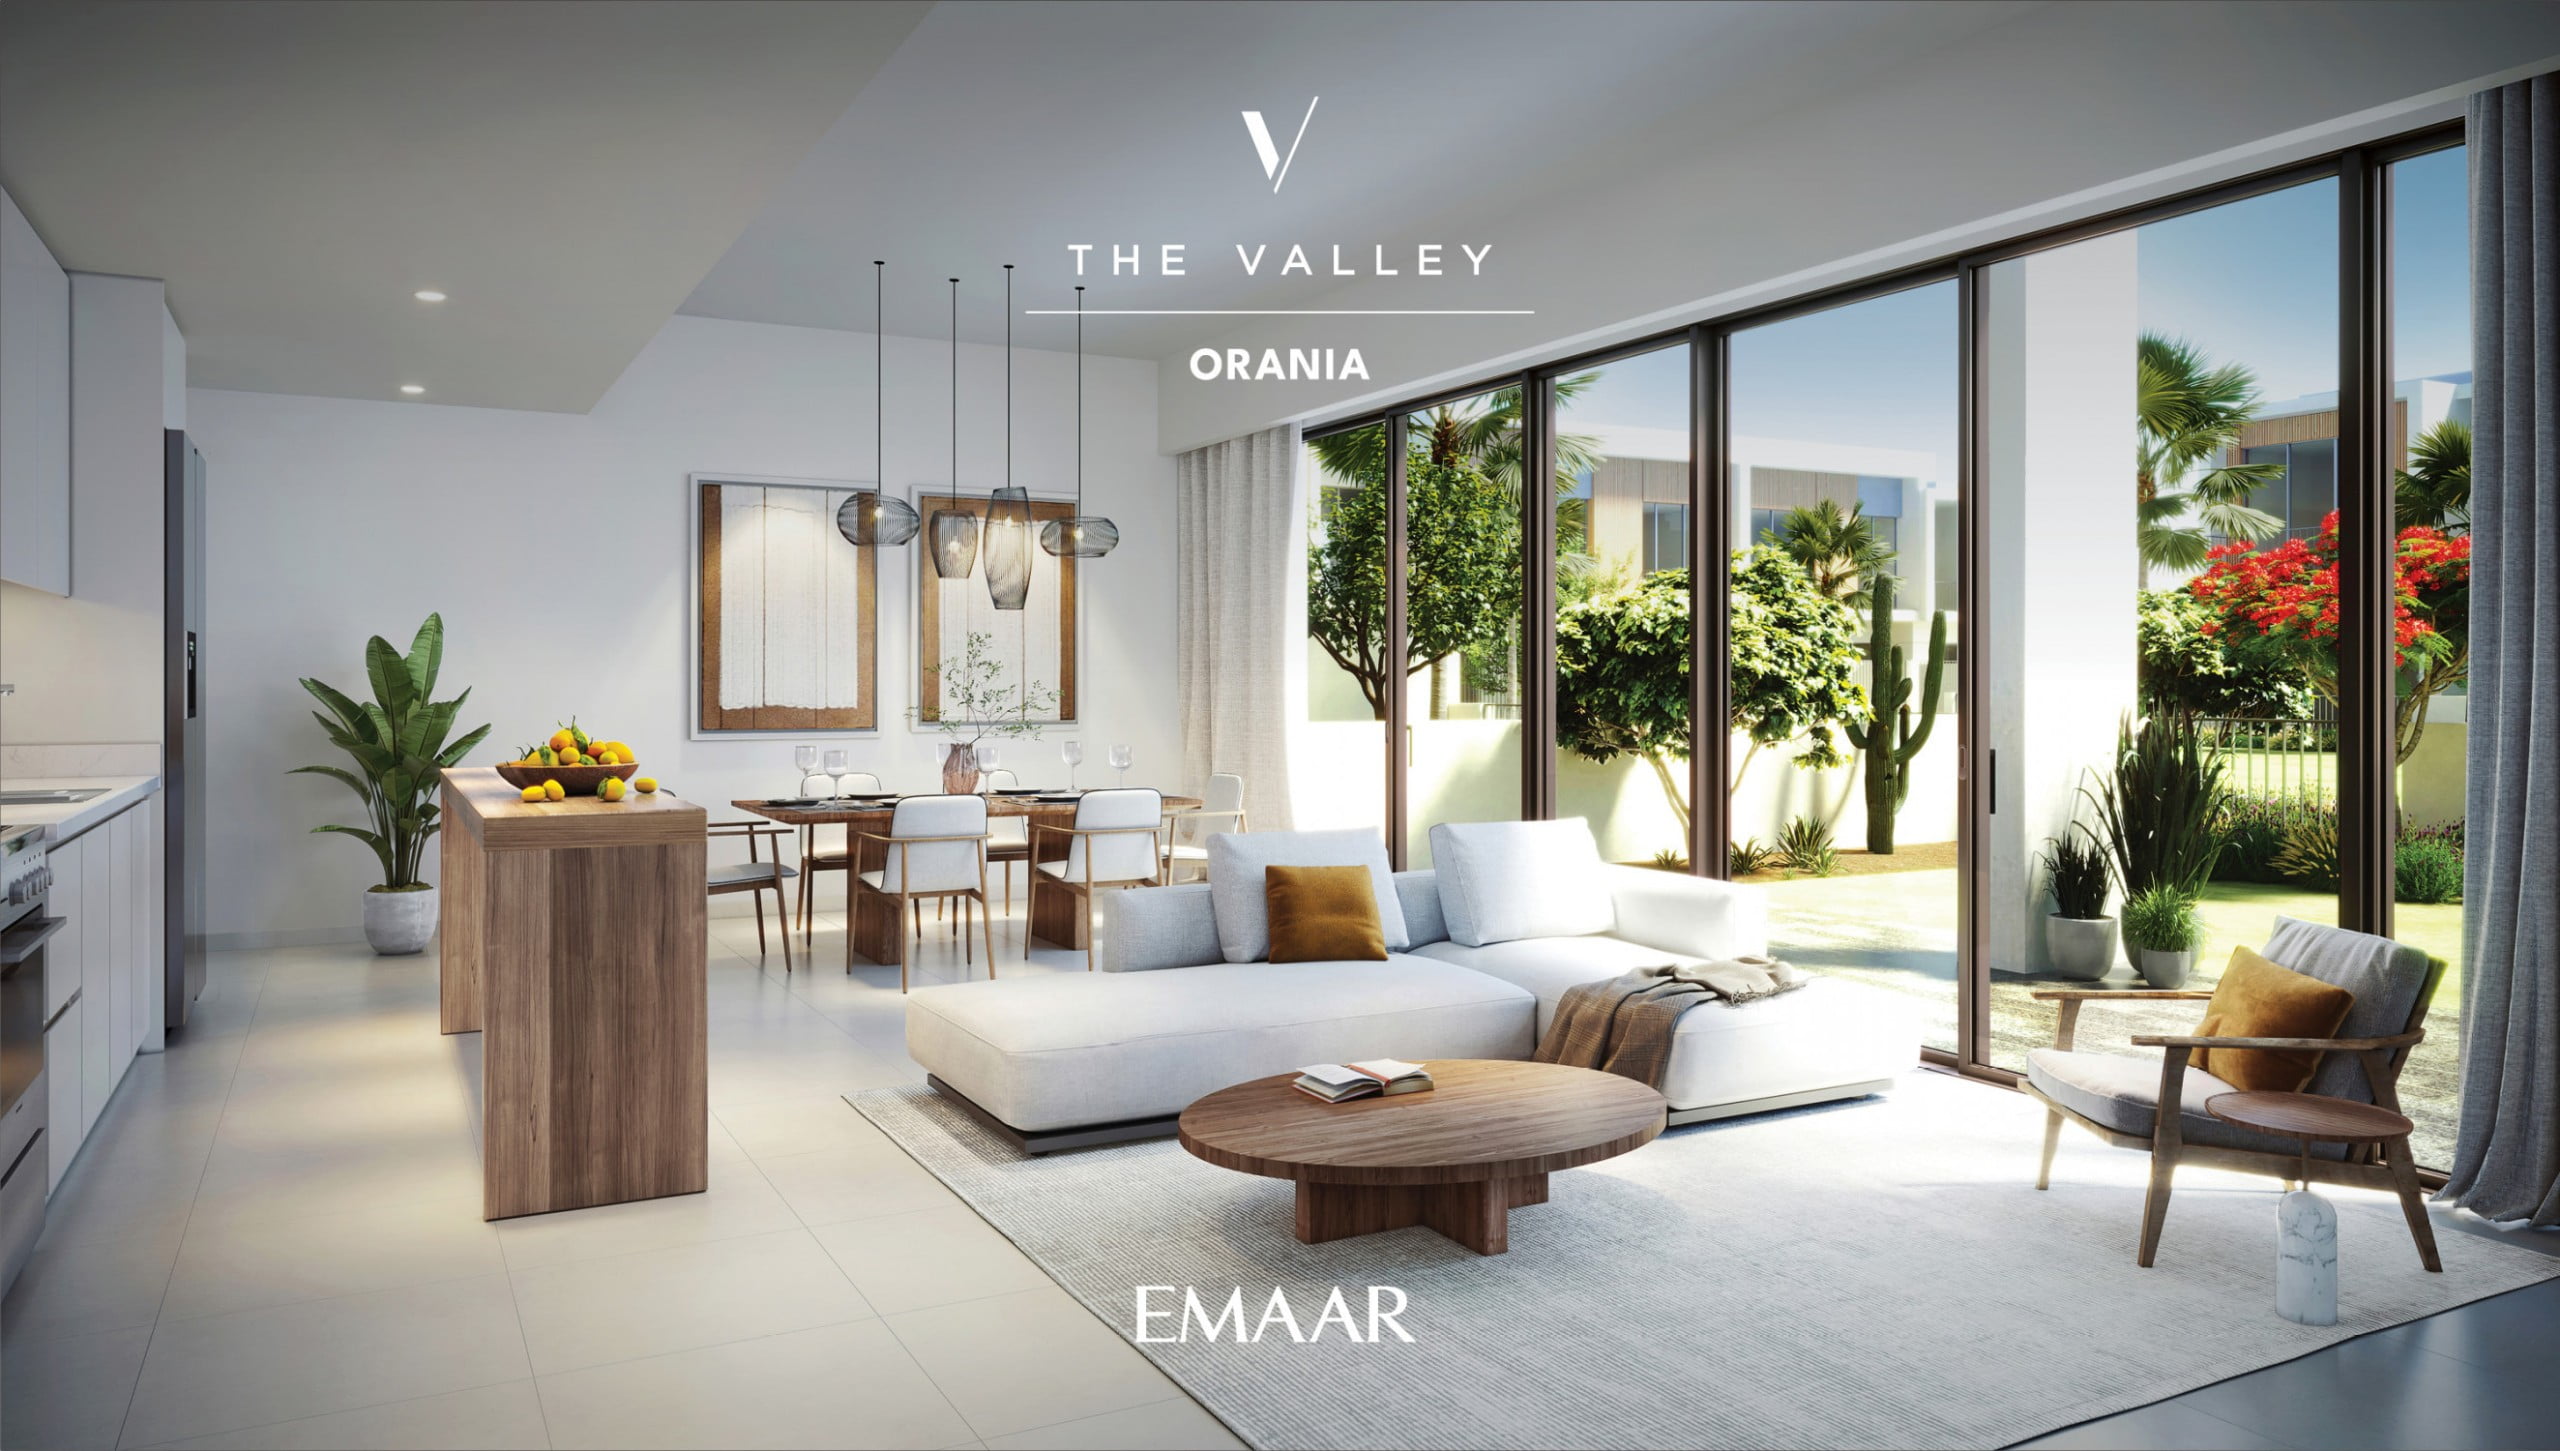 ORANIA THE VALLEY EMAAR 13 scaled - Immobilier Dubai